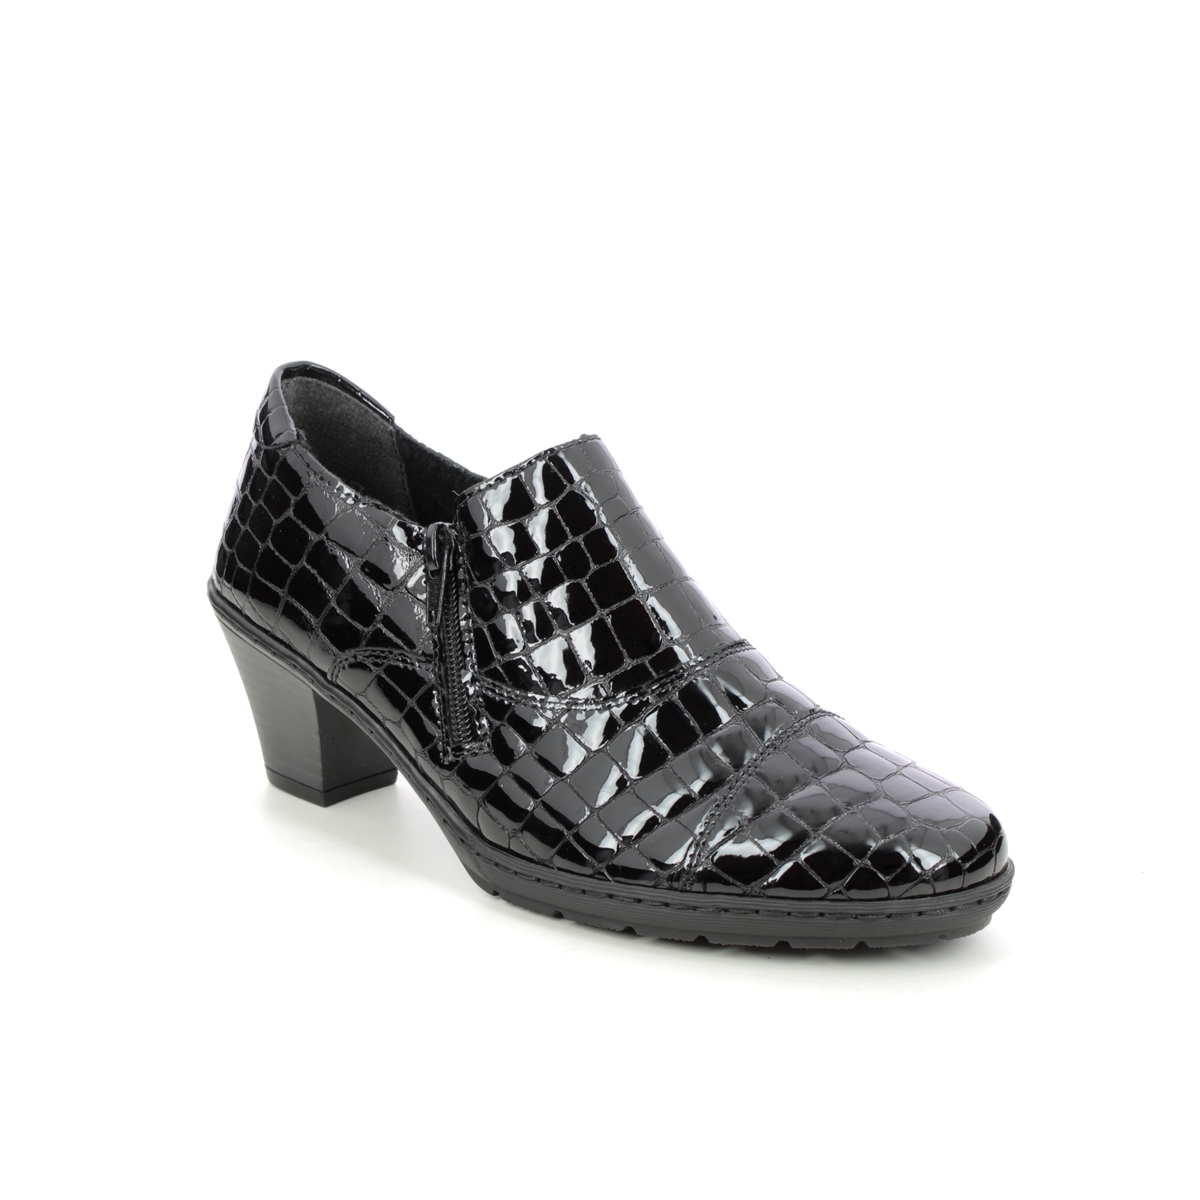 Rieker Addicap Black Croc Womens Shoe-Boots 57173-03 In Size 37 In Plain Black Croc Effect